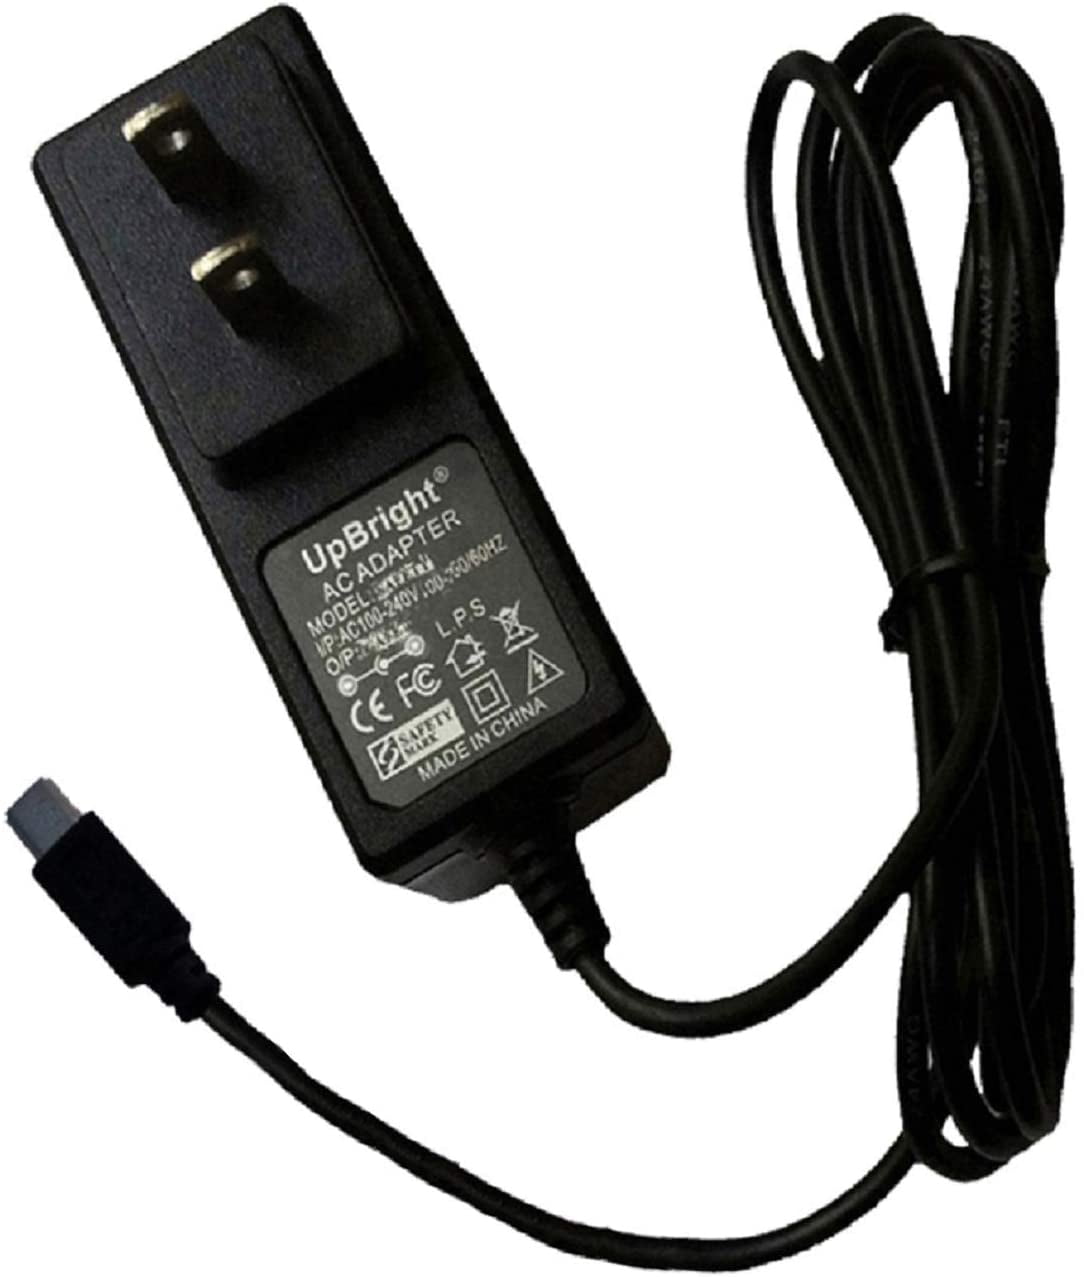 USB Charger Power Cord For TECSUN U-600 DC05 PL-450 PL-600 PL-660 R-9700DX Radio 